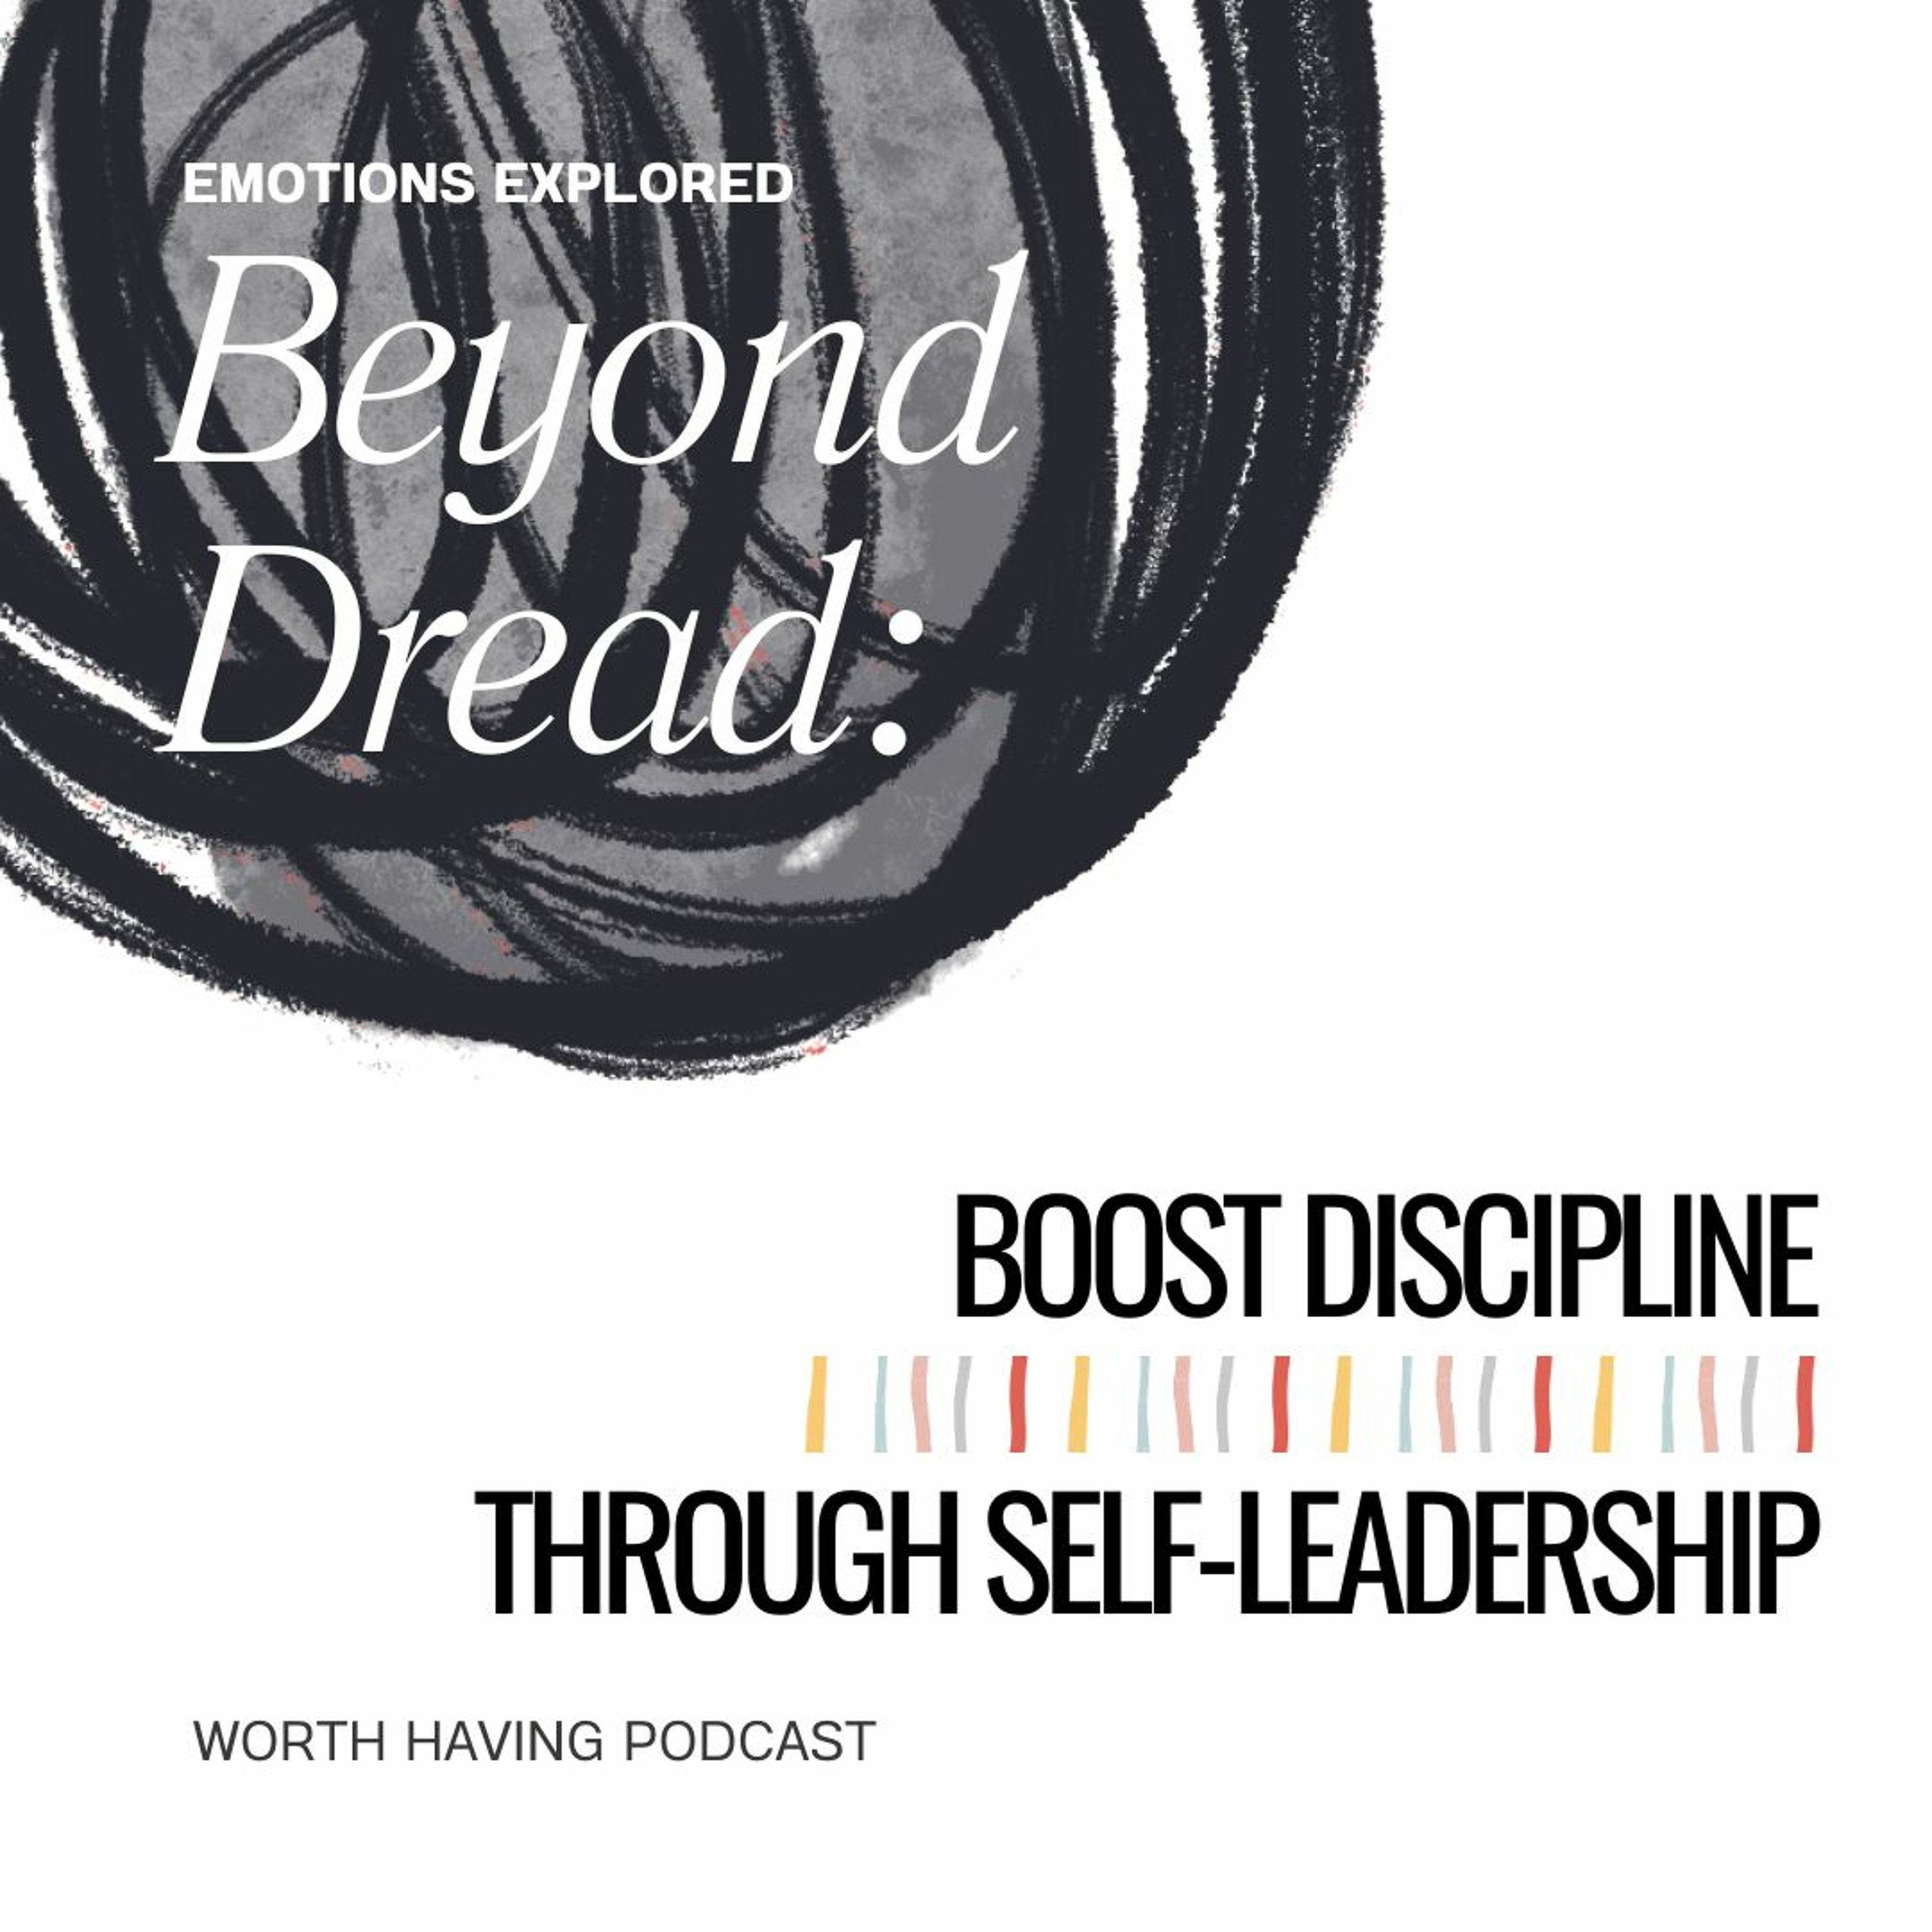 Beyond Dread. Boost discipline through Self-Leadership